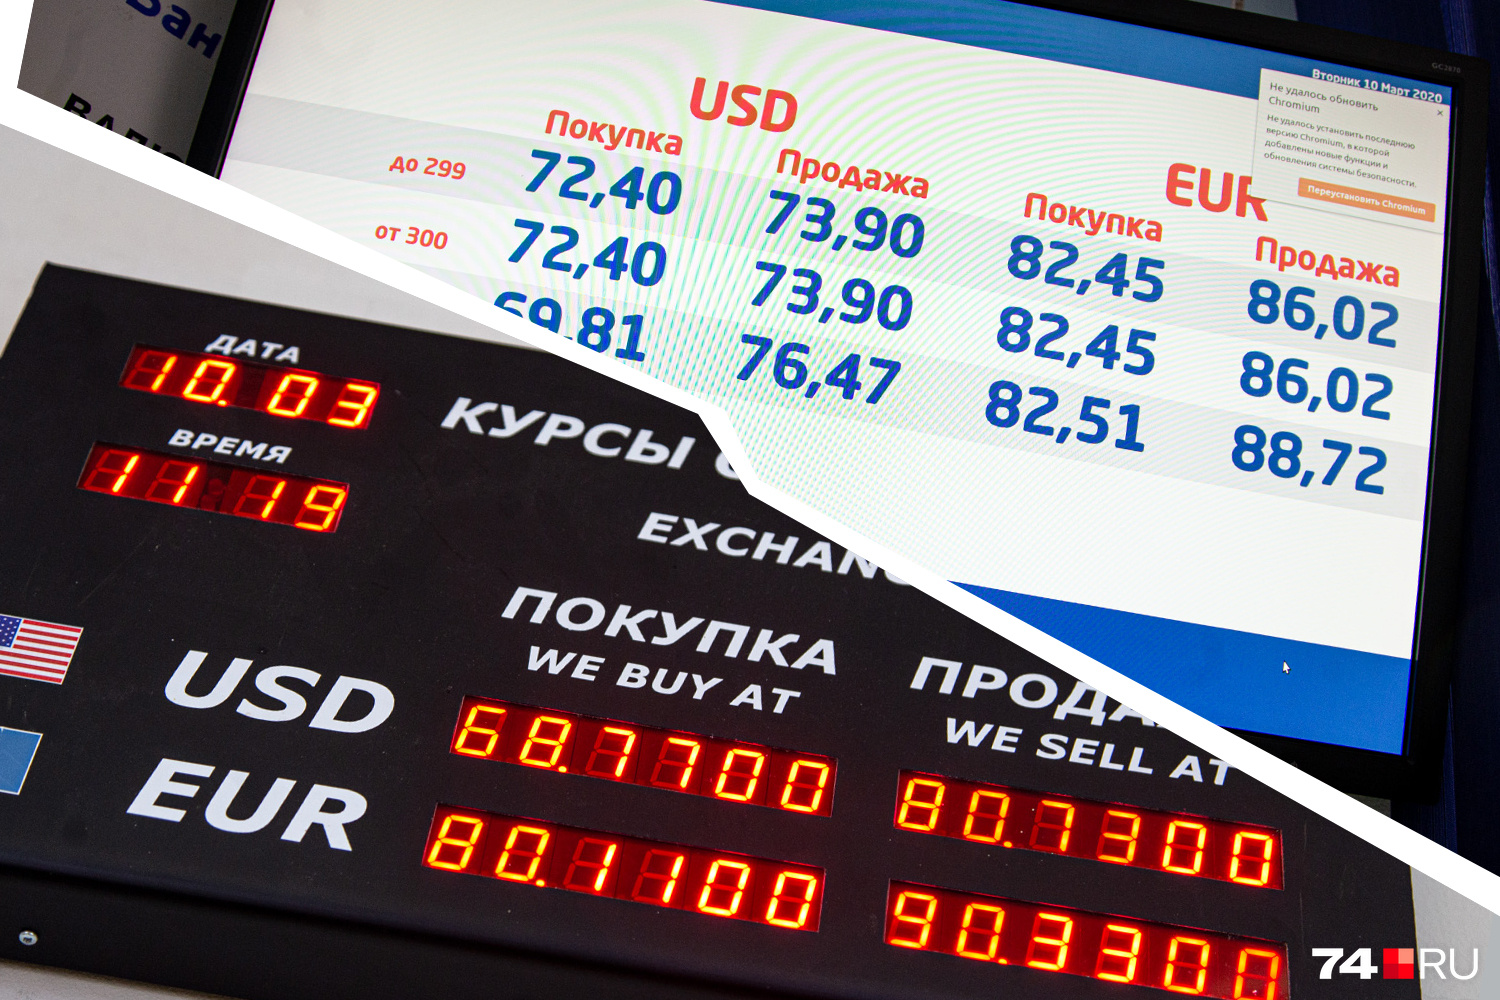 Обменный доллар на рубли. Курсы валют. Валютный курс. Курсы валют в рублях. Котировки курсов валют.